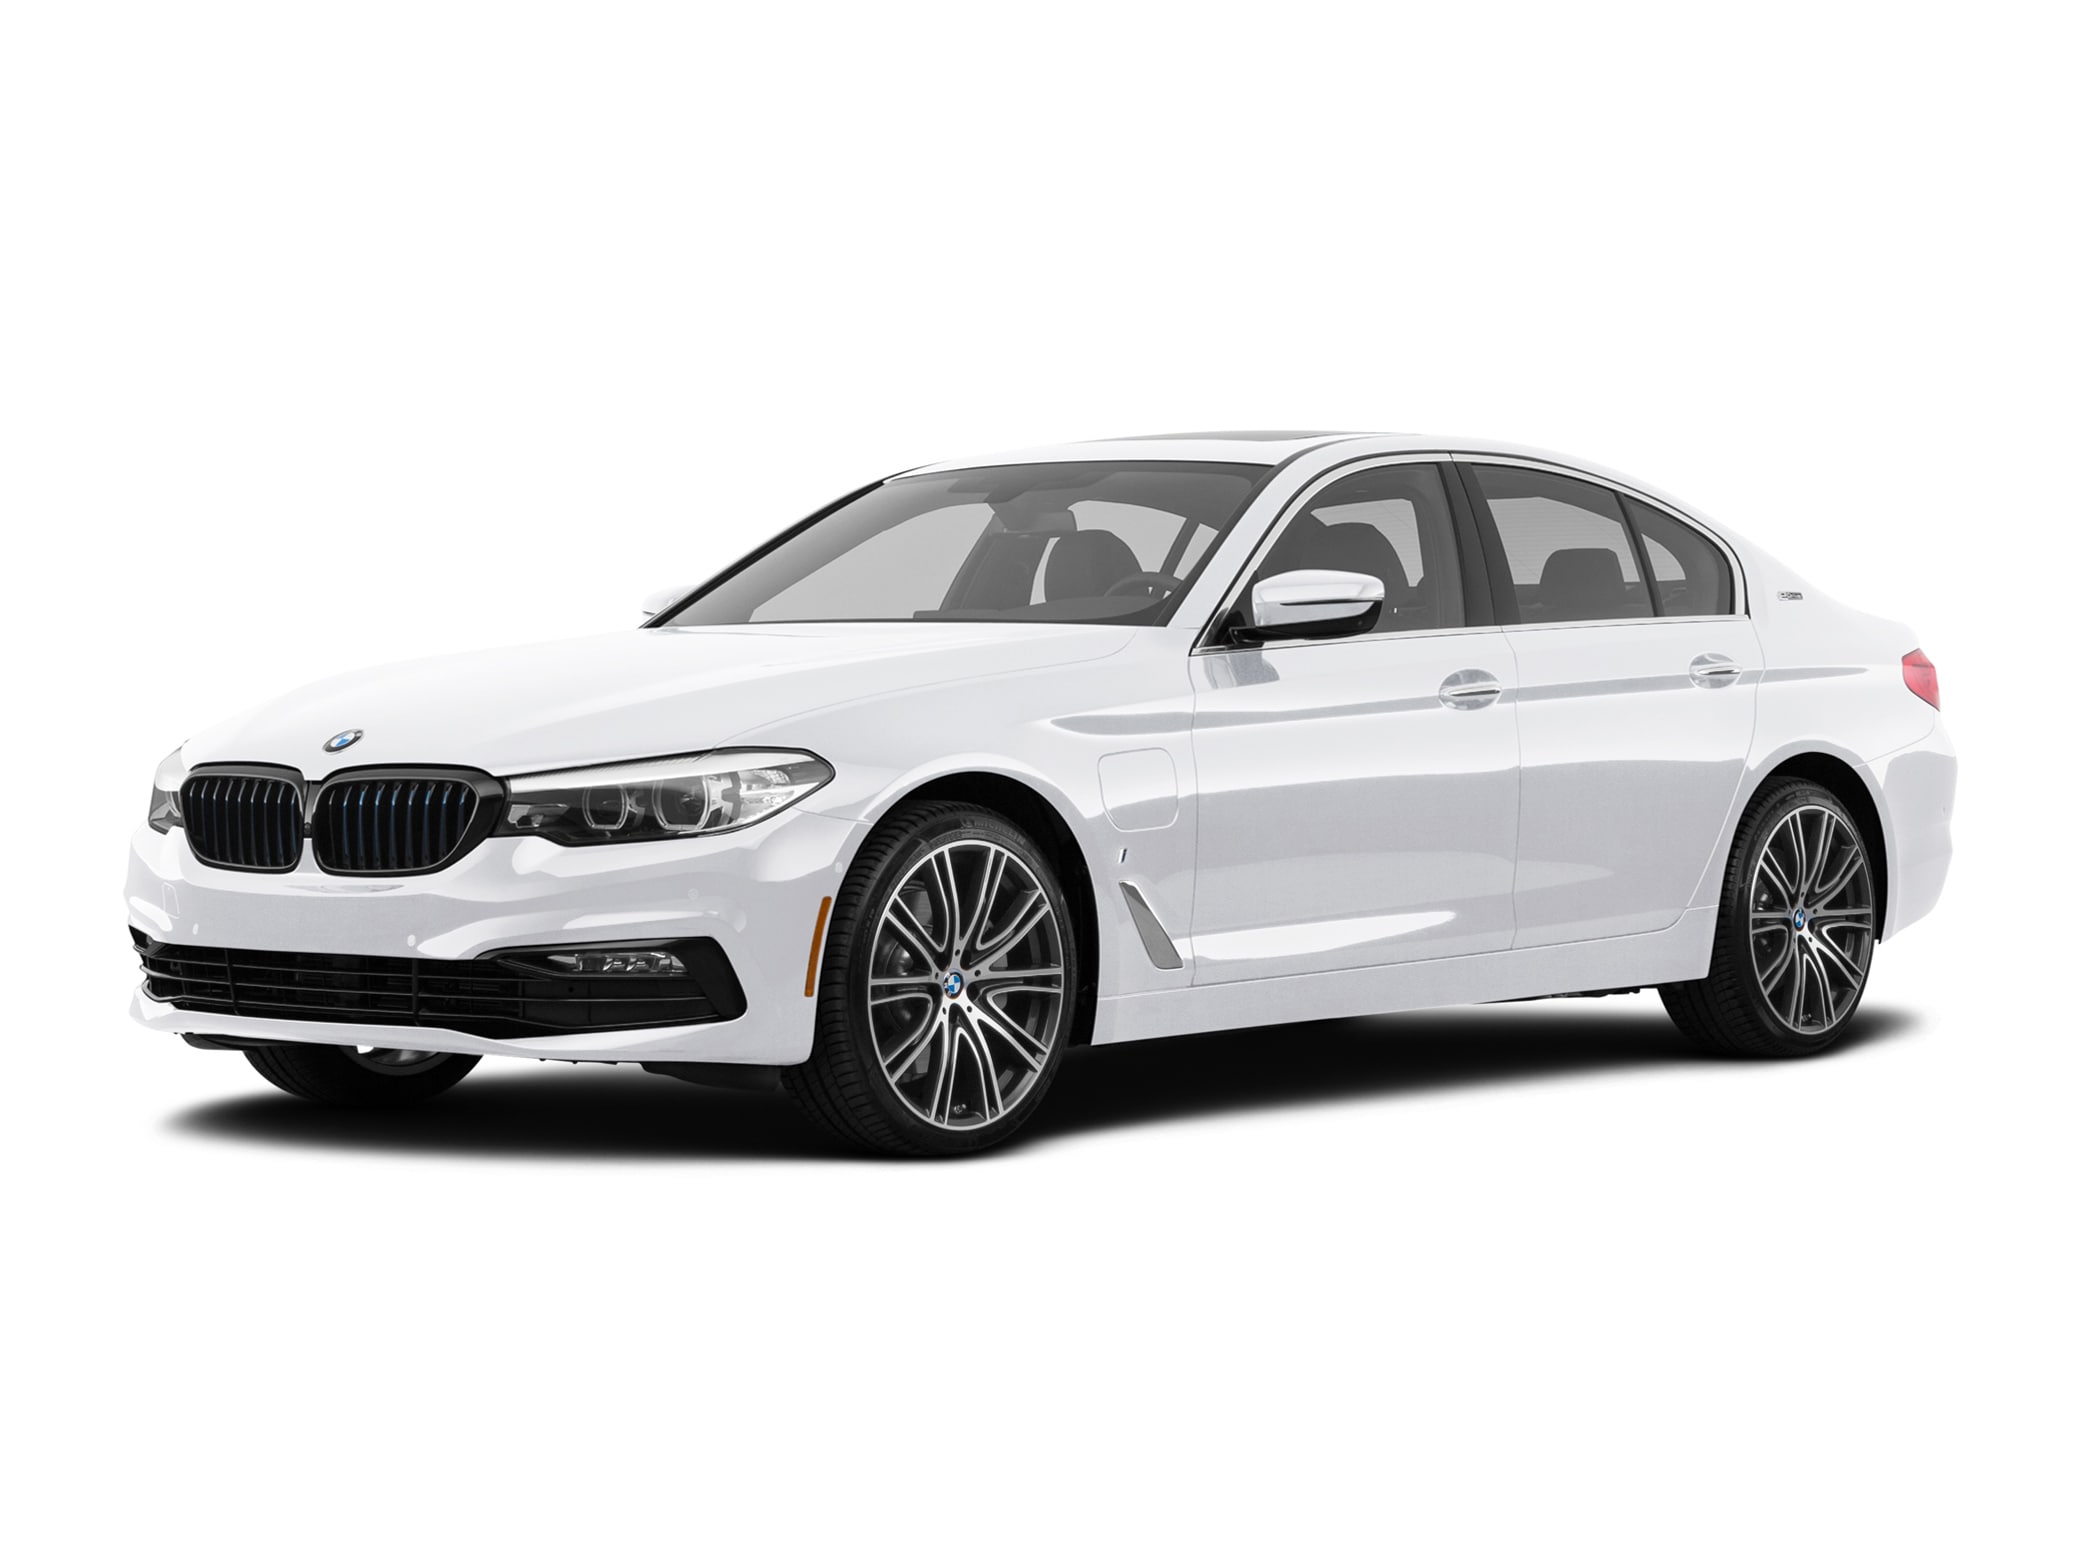 2019 BMW 530e For Sale in Atlanta GA | Global Imports BMW